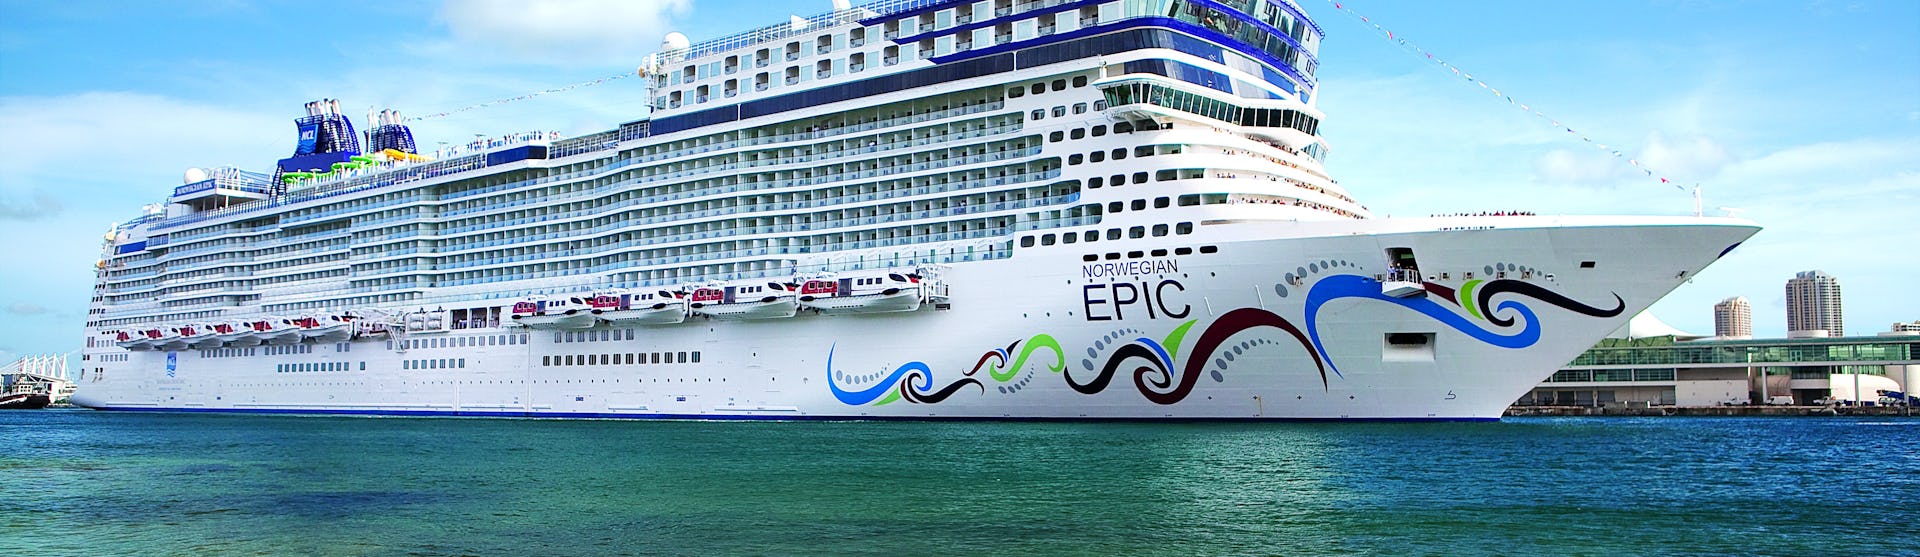 Norwegian Epic - Norwegian Cruise Line